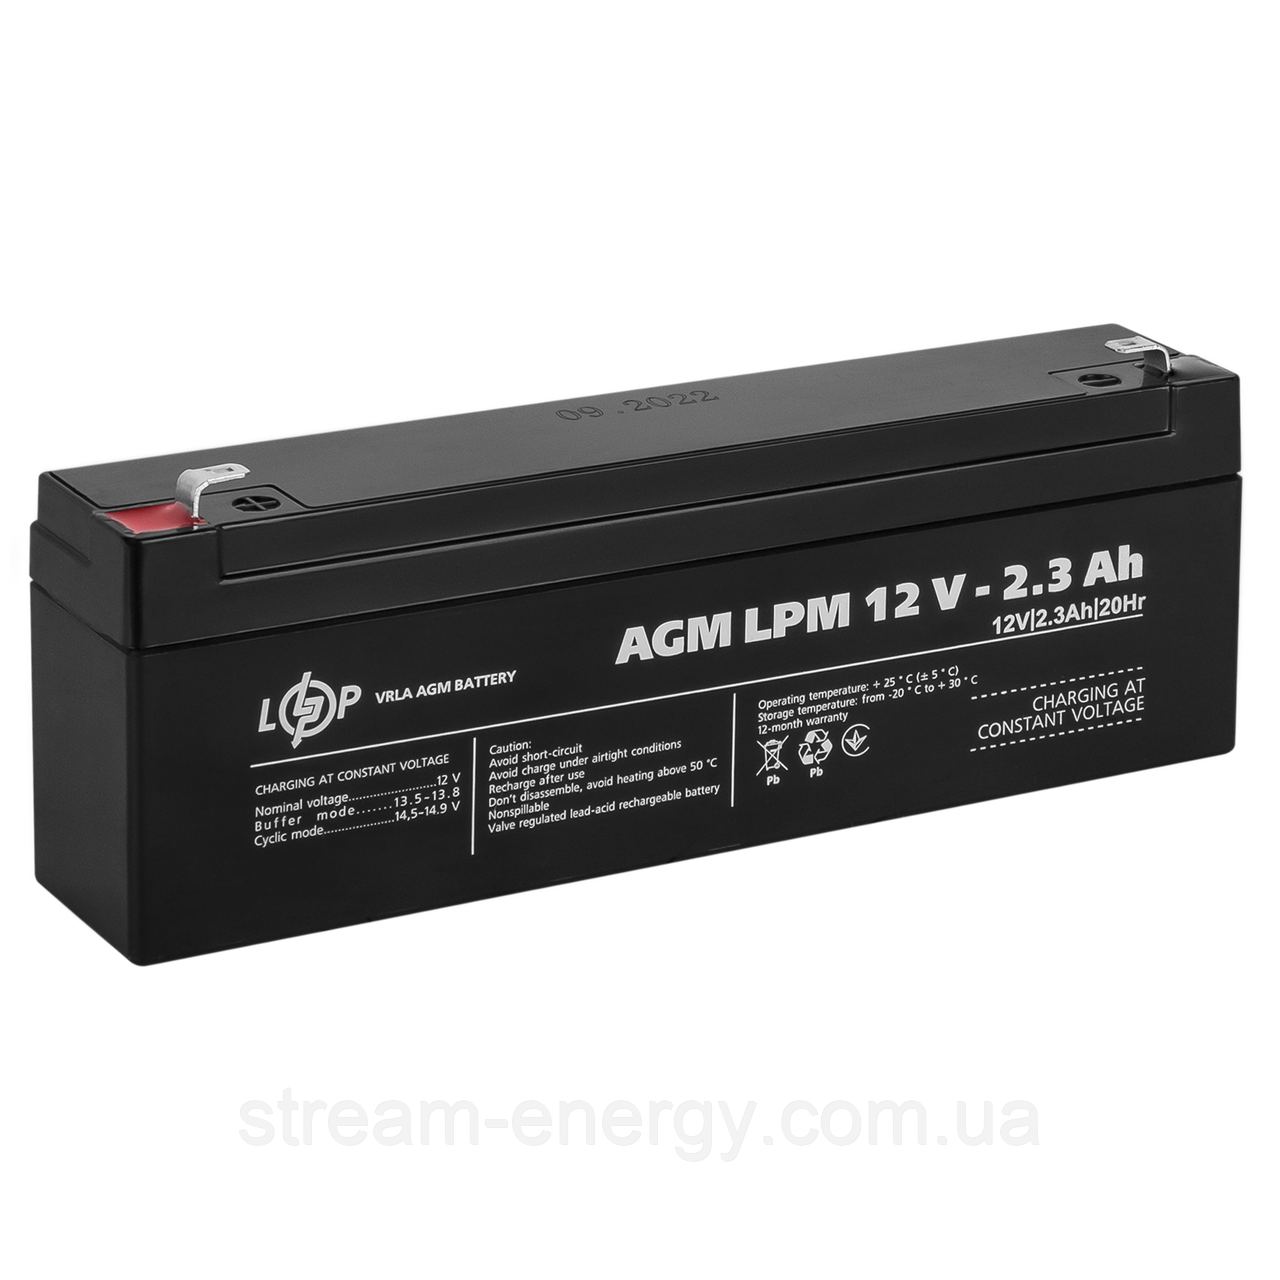 Акумулятор AGM LPM 12V - 2.3 Ah